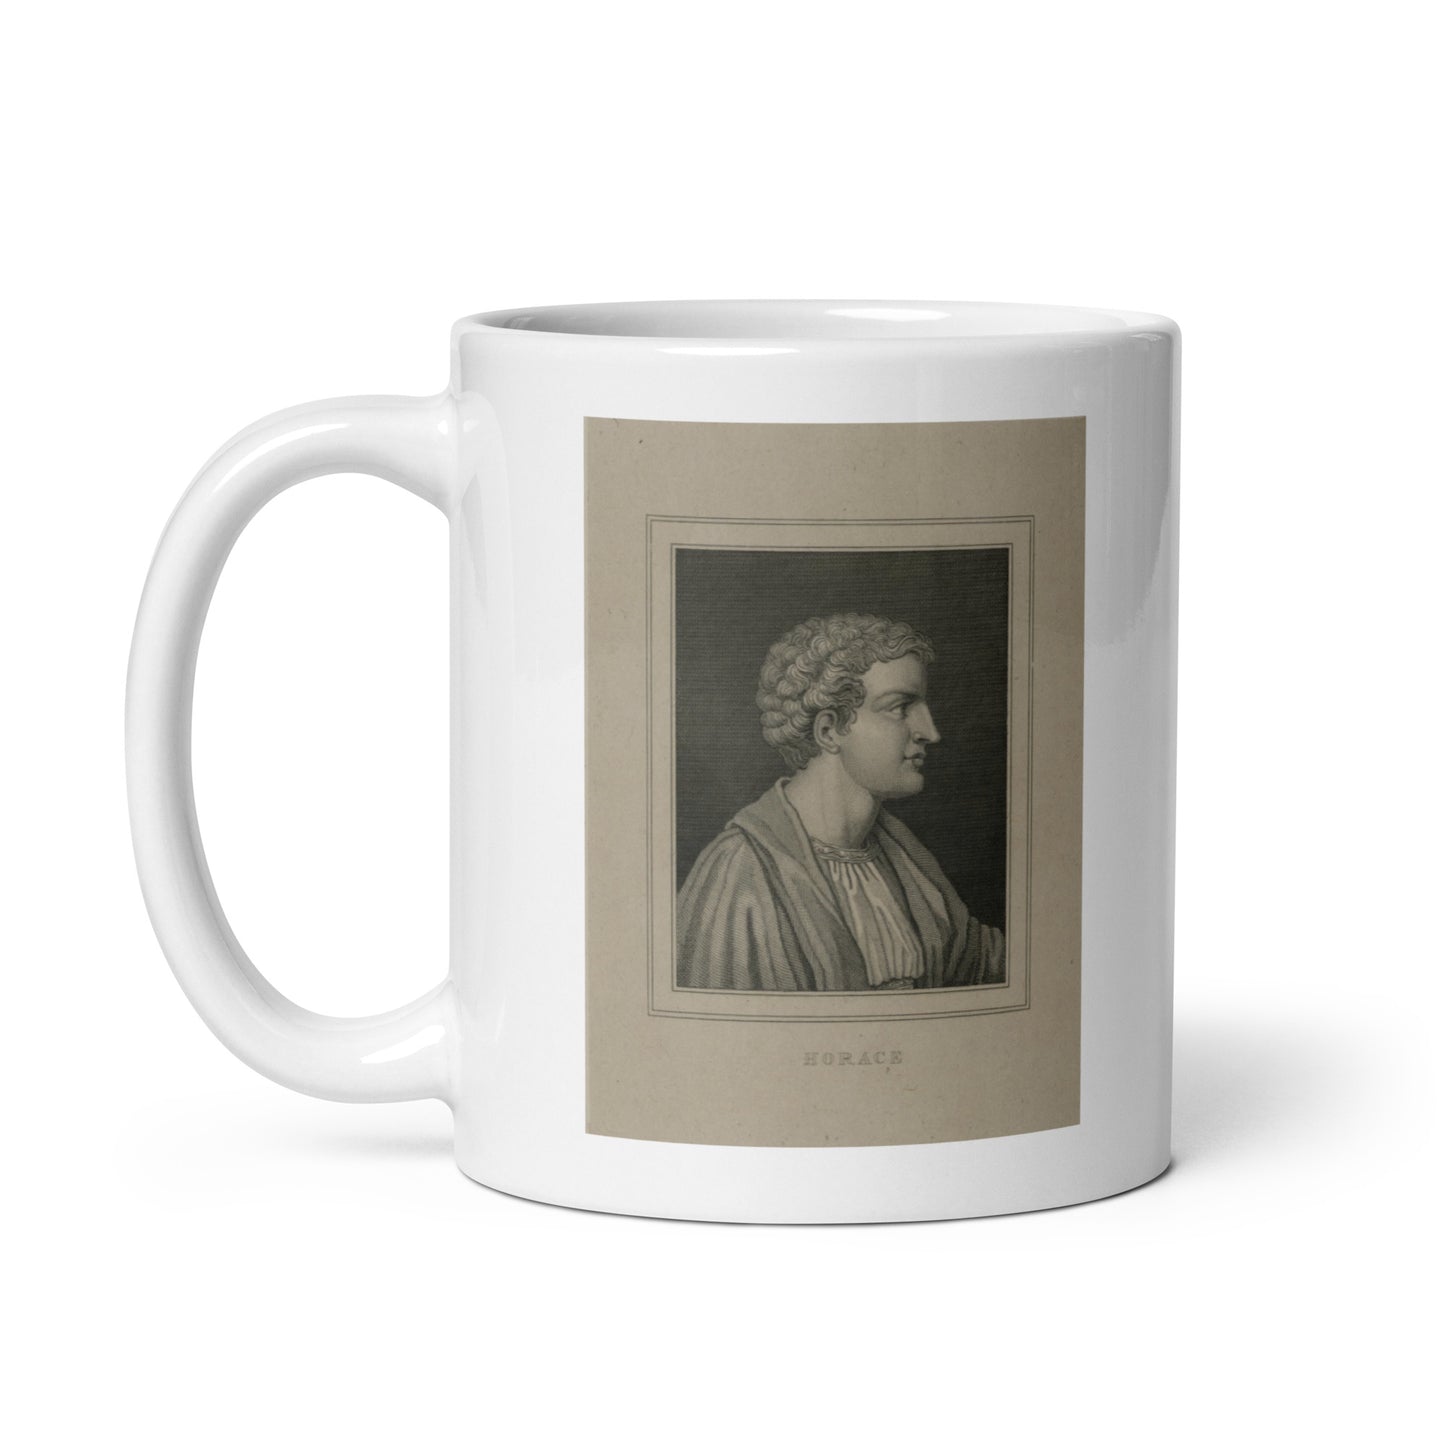 Horace white glossy mug